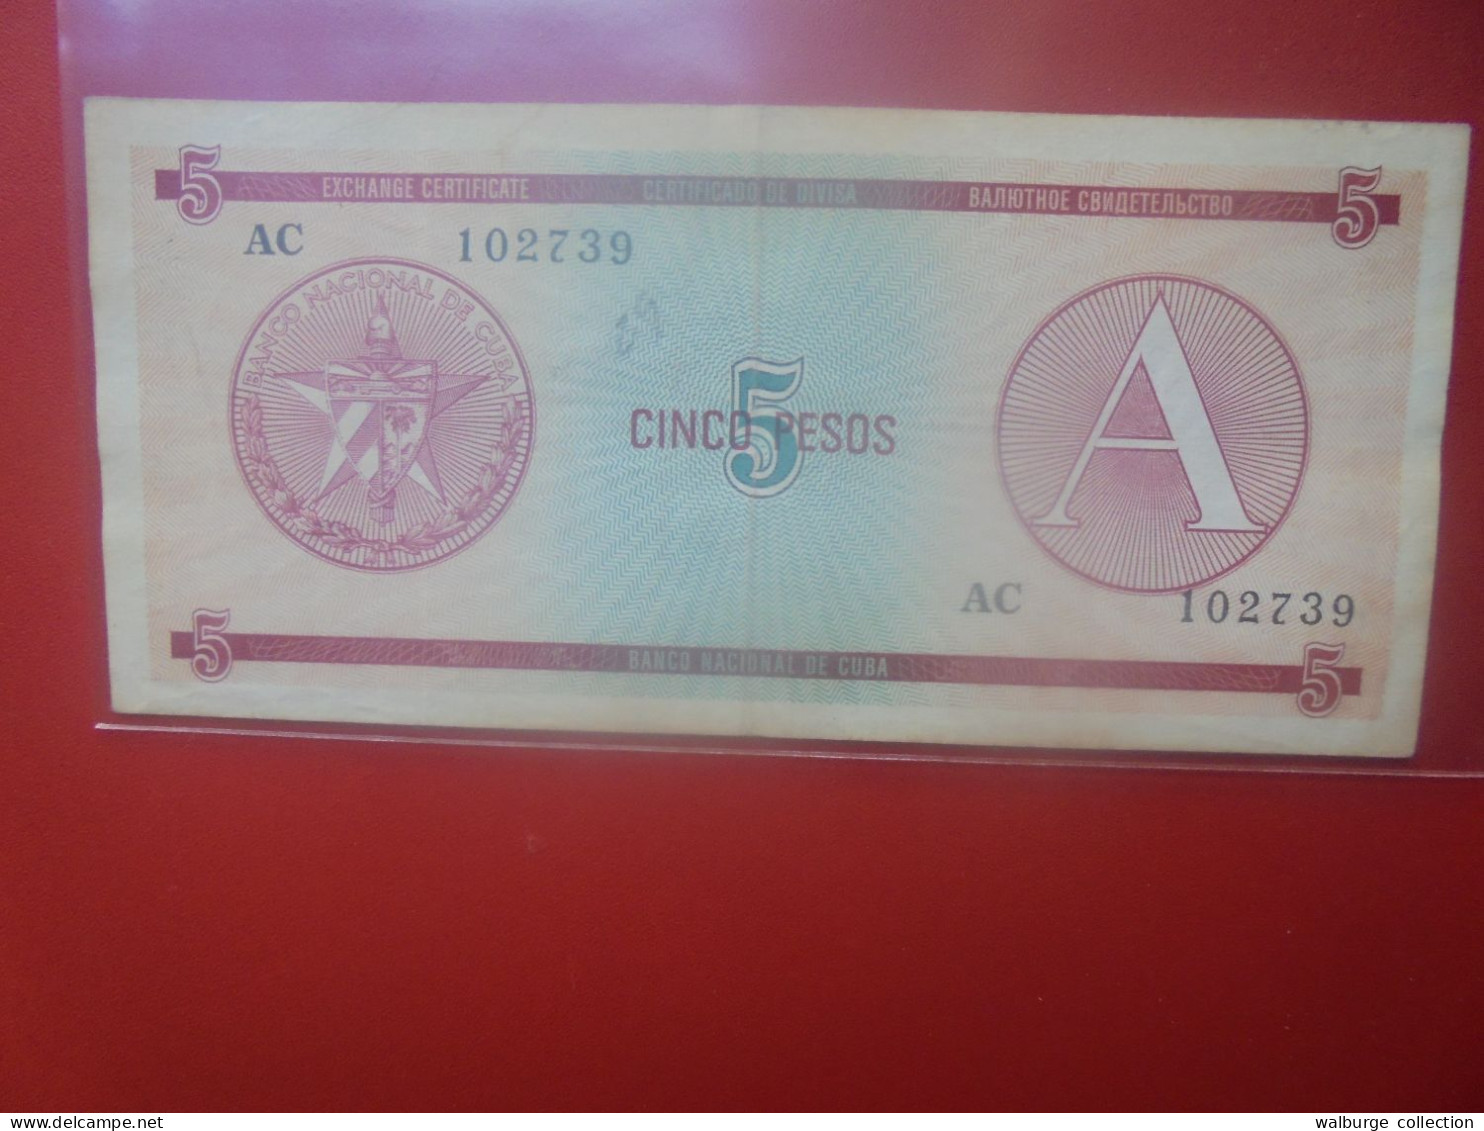 CUBA 5 PESOS ND (1985) "Exchange Certificate" Série A Circuler (B.33) - Cuba